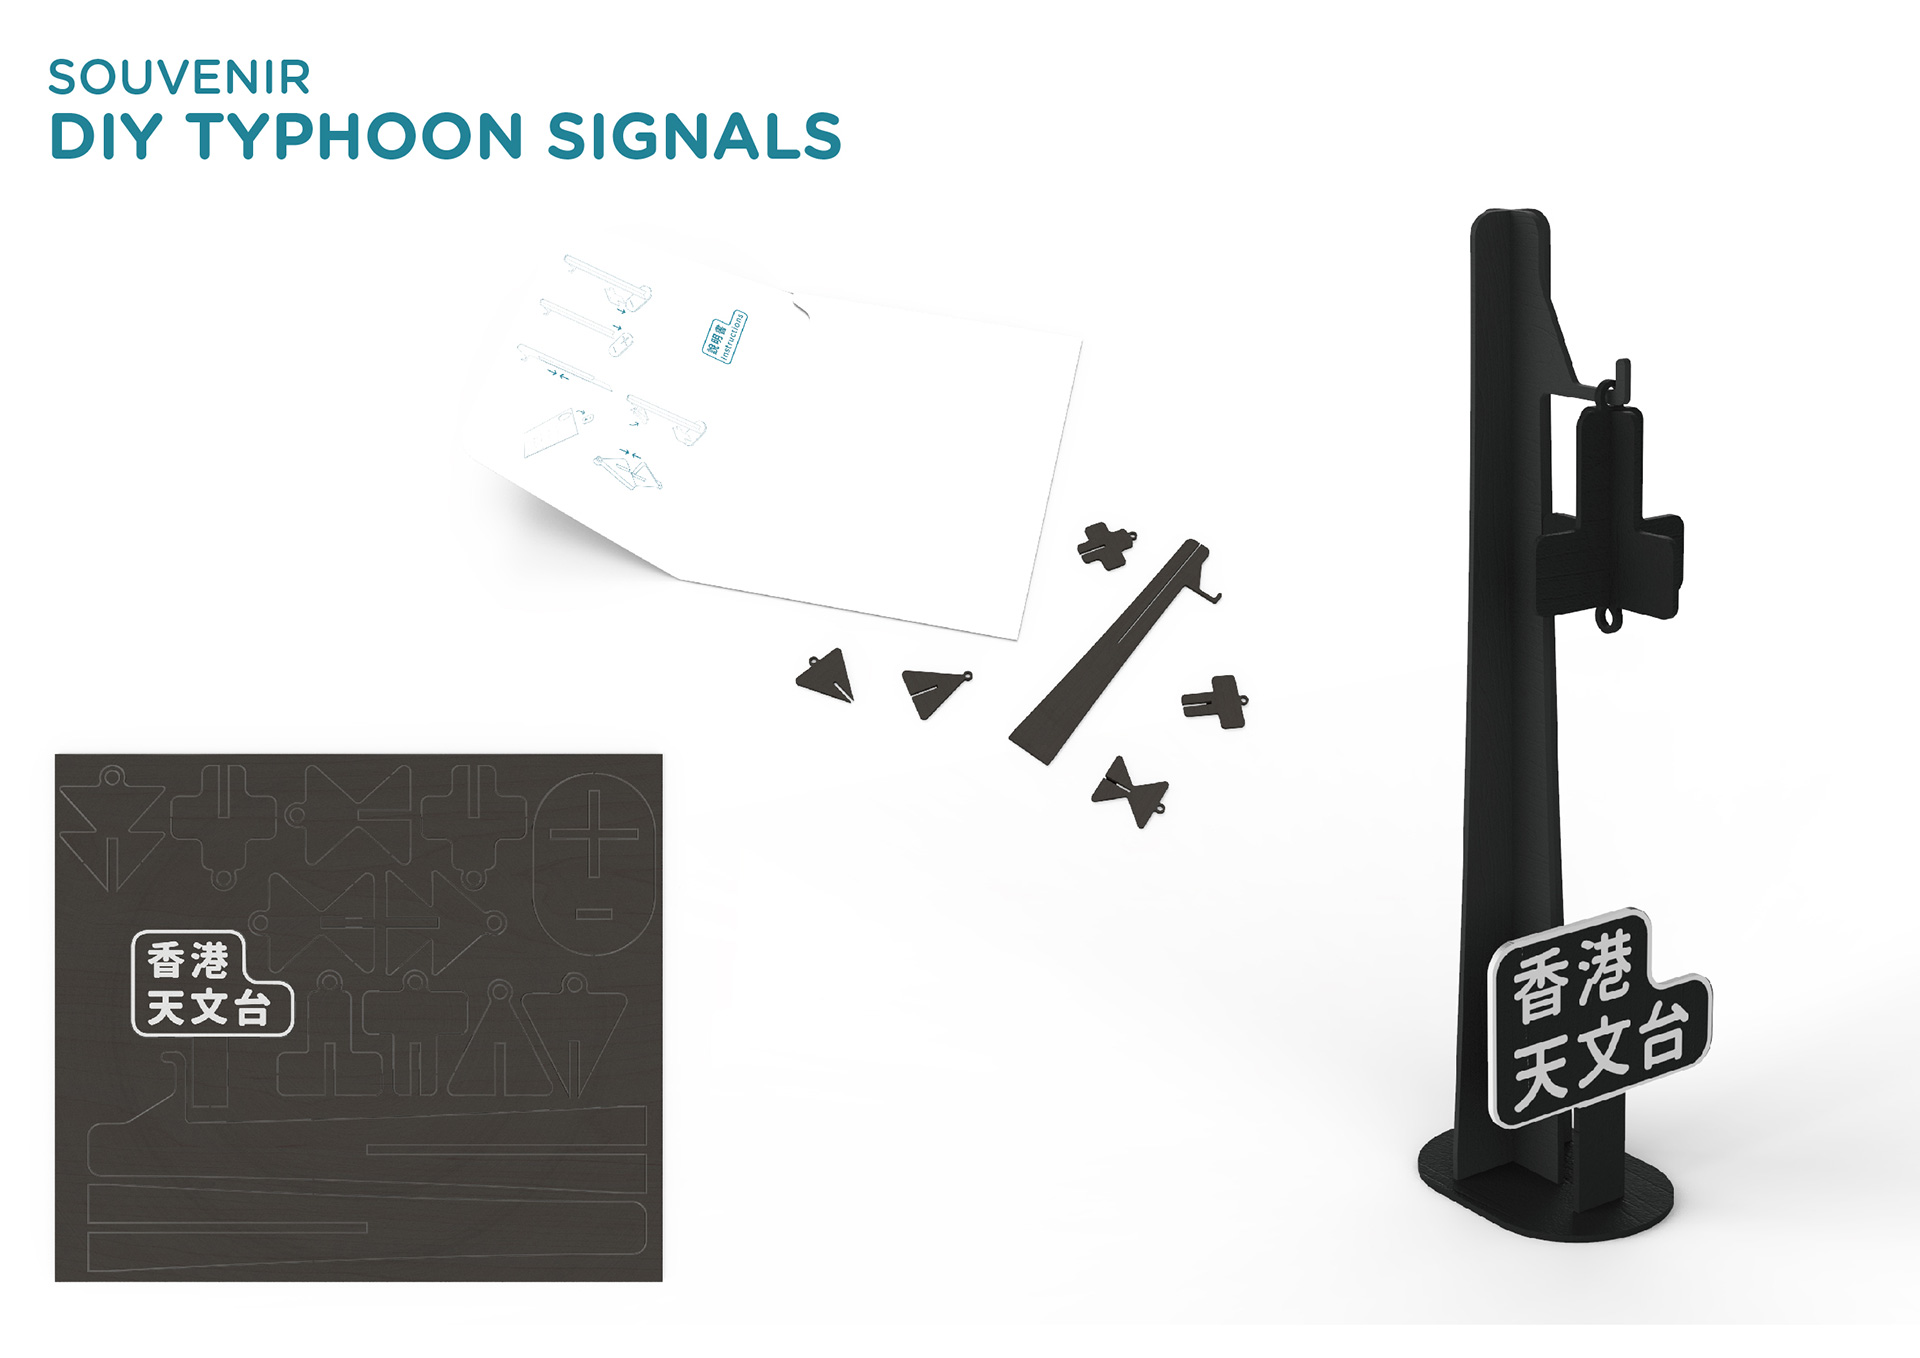 DIY-typhoon-signals